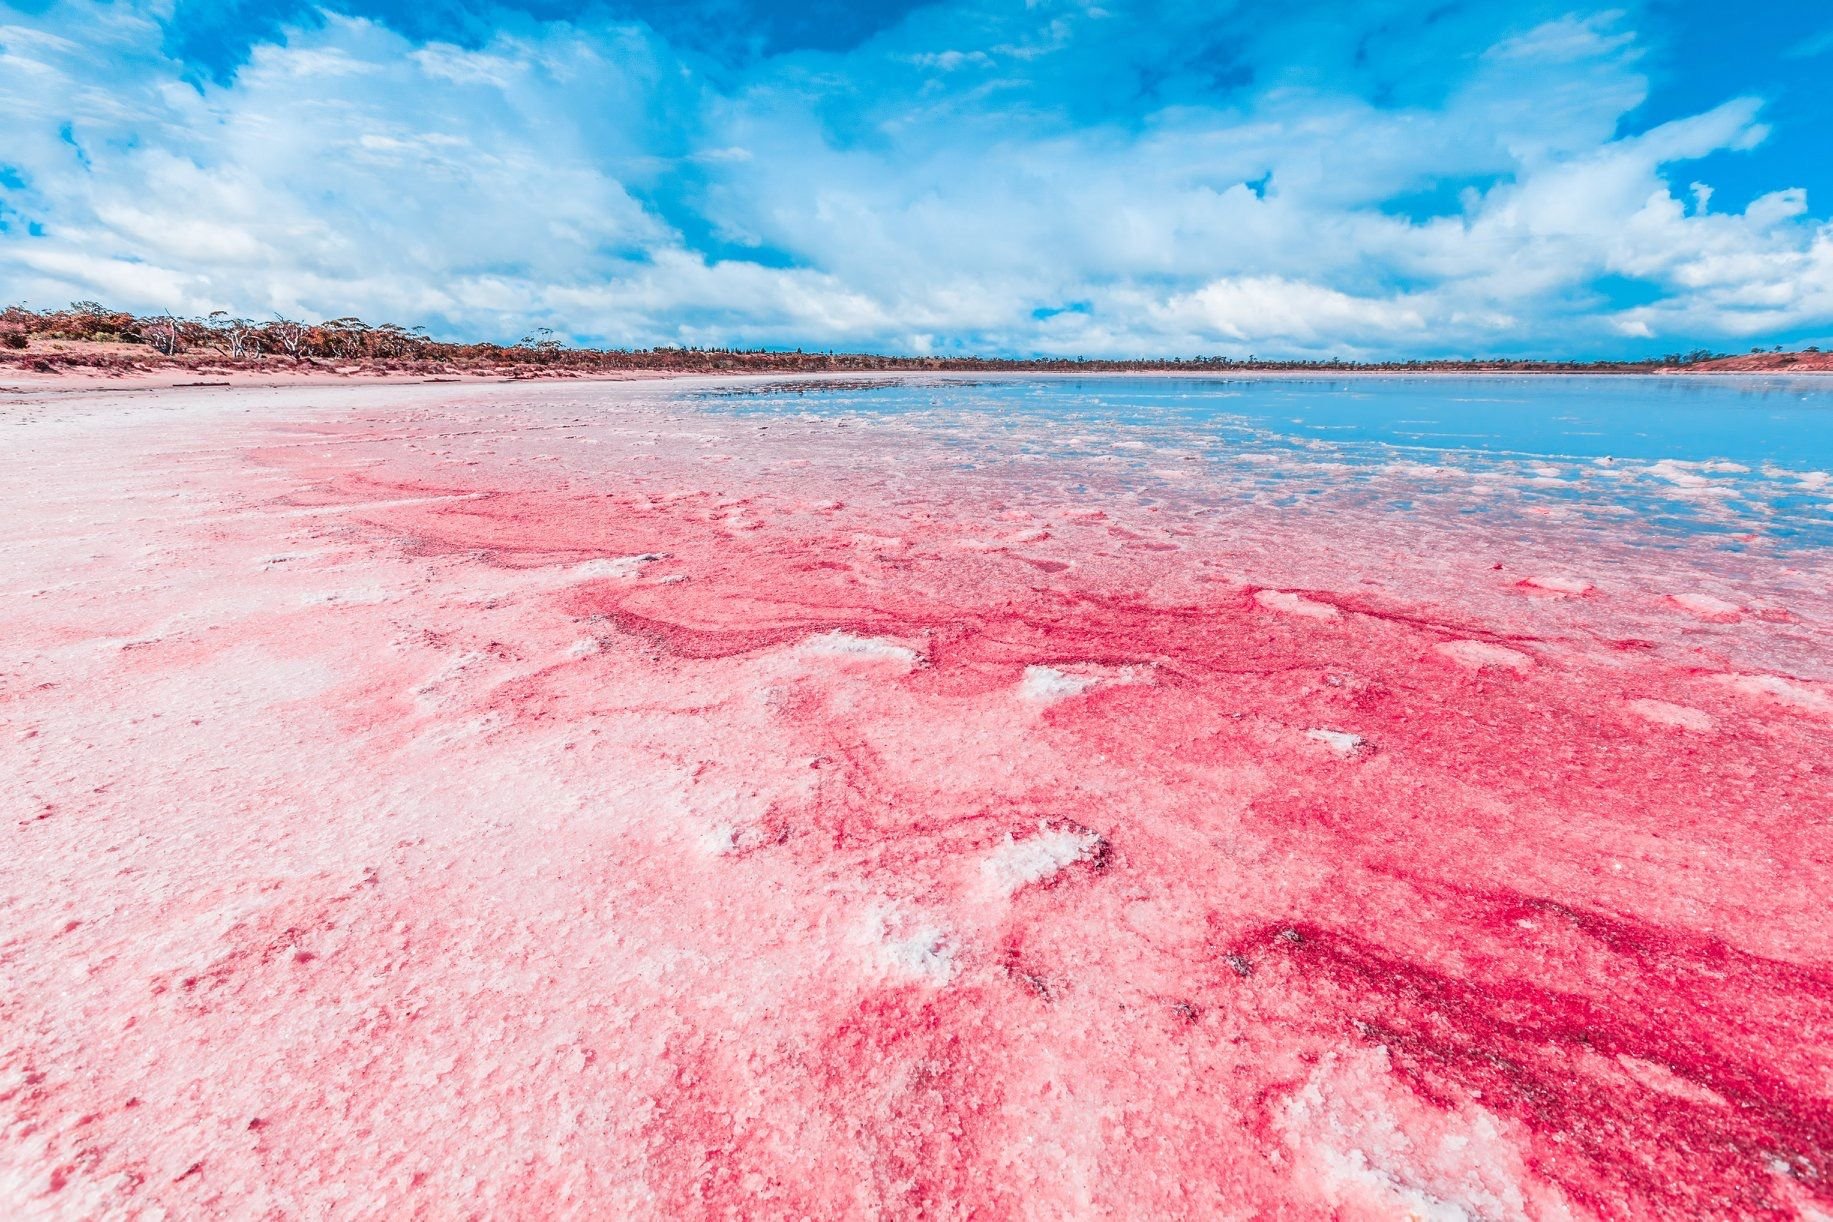 Озеро хиллер австралия. Озеро Хиллиер. Озеро Ретба Сенегал. Озеро Хиллер (hillier), Австралия. Розовое озеро Хиллер Австралия.